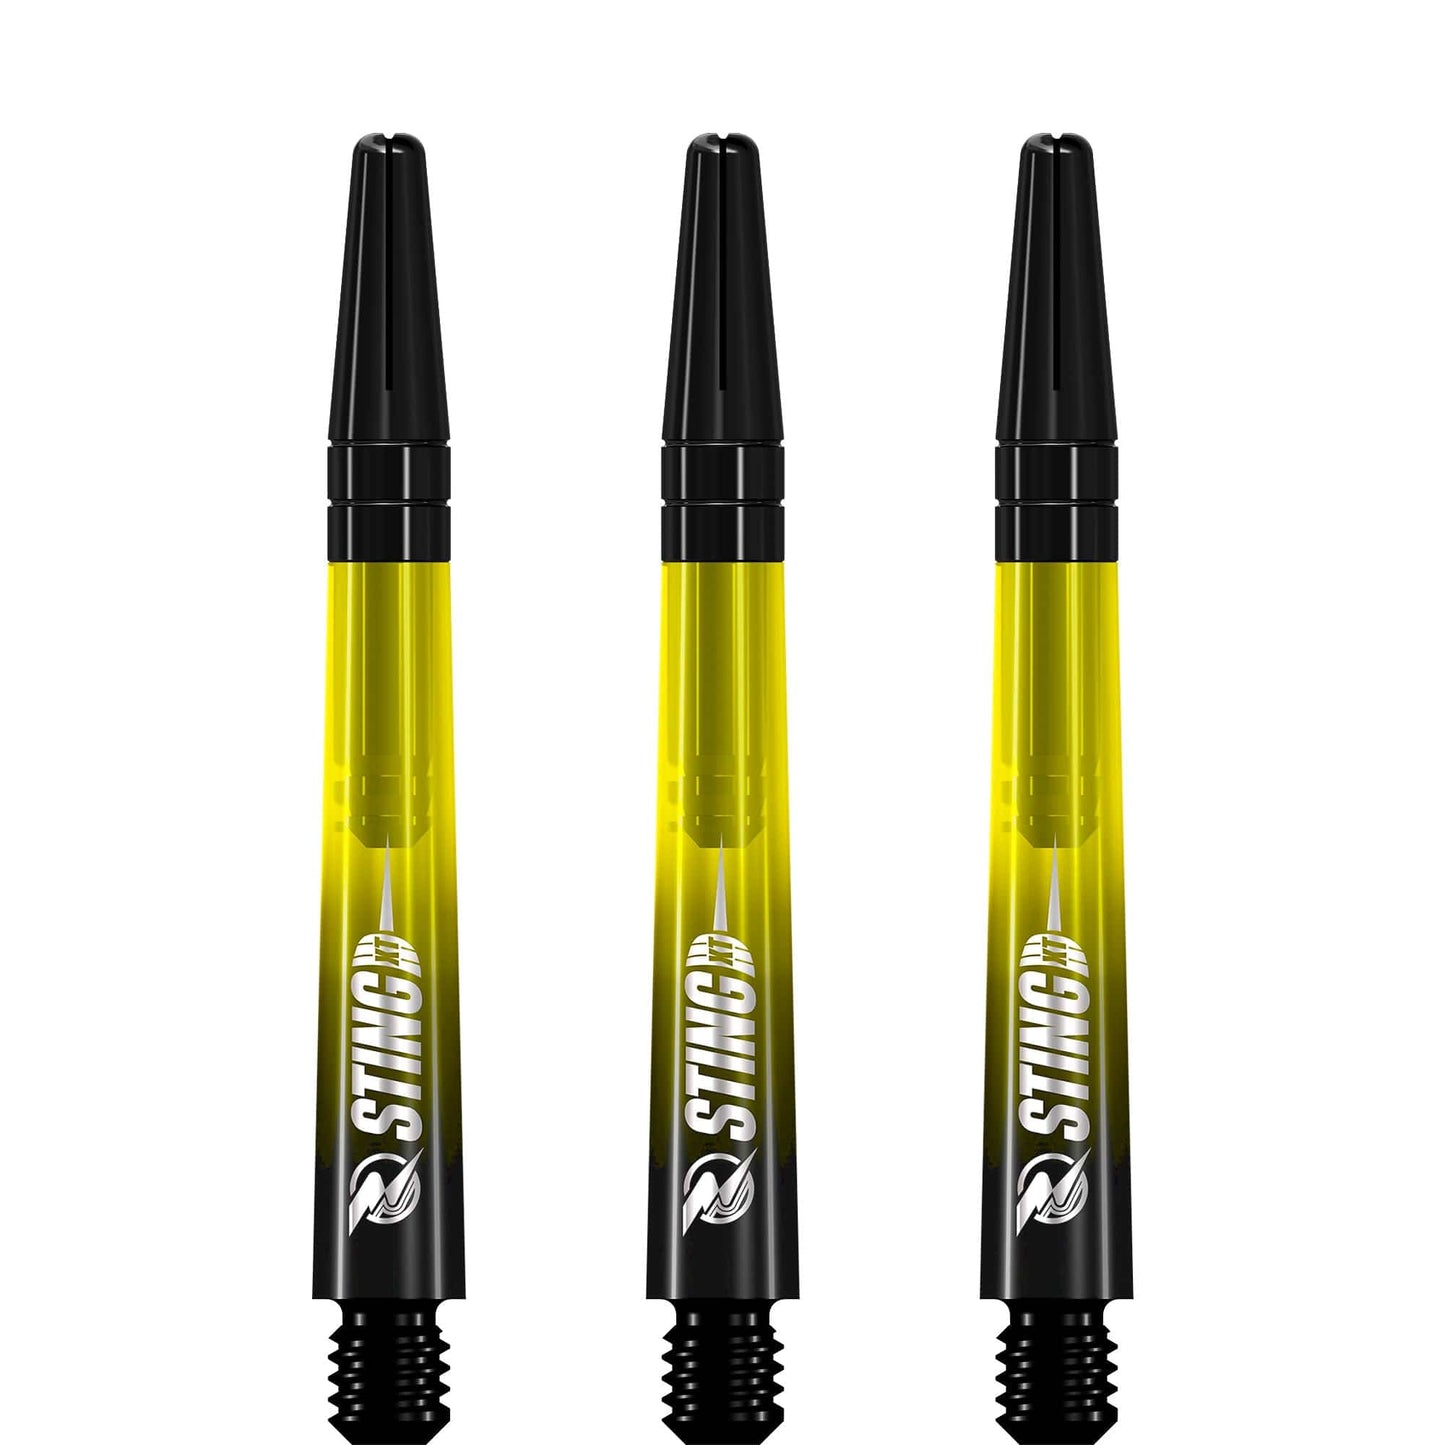 Ruthless Sting XT Dart Shafts - Polycarbonate - Gradient Black & Yellow - Black Top Tweenie Plus